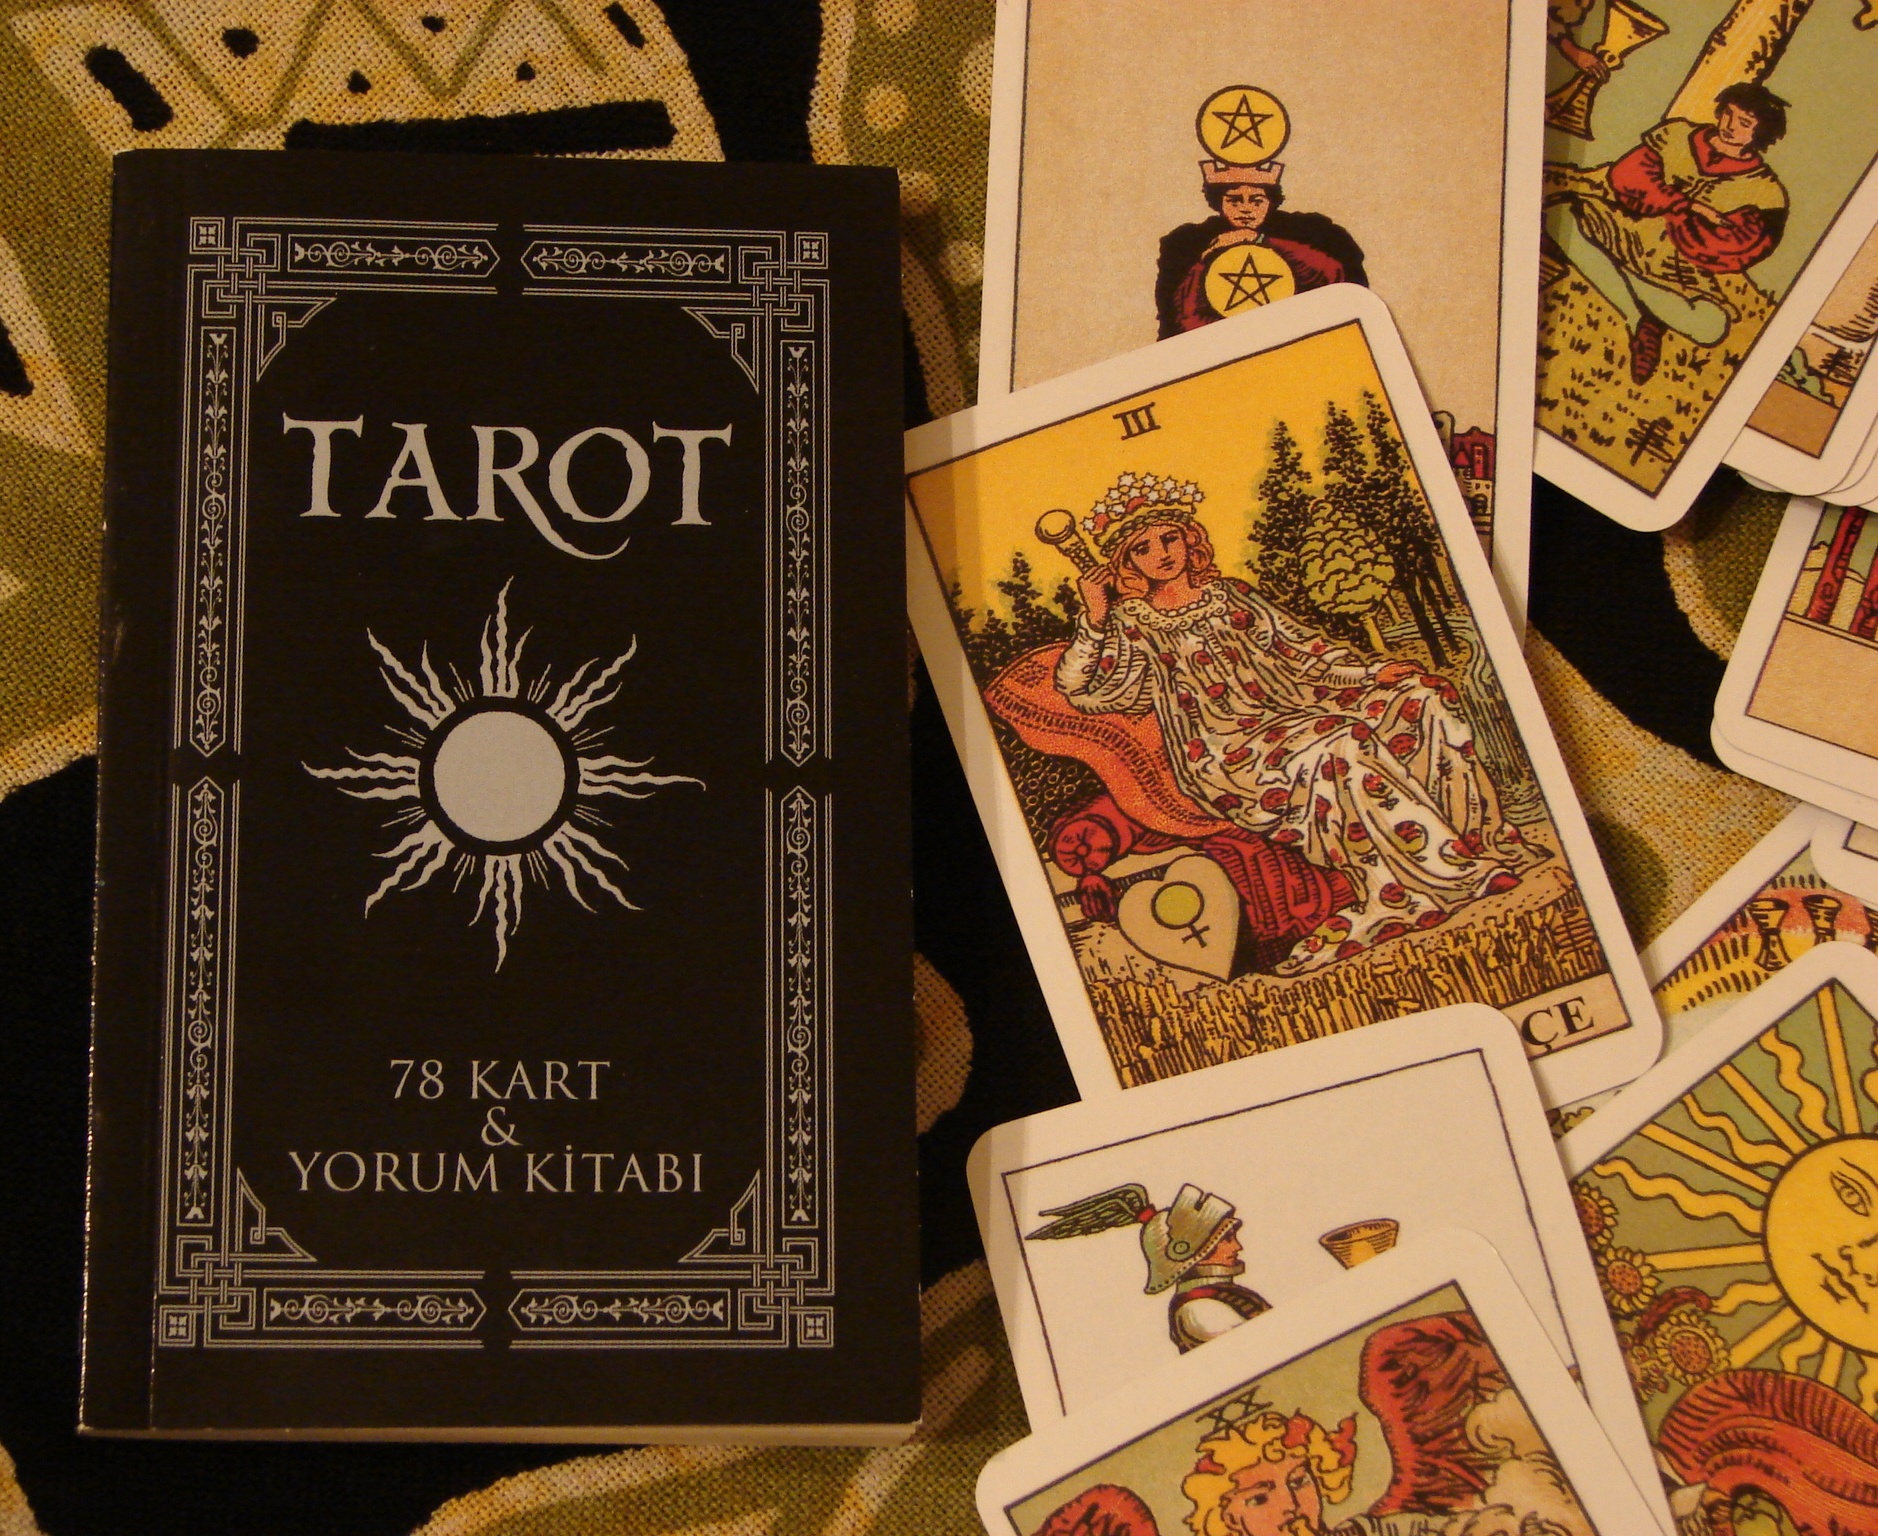 Карты таро купить интернет. Карты "Таро". Упаковка карт Таро. Карты Таро упаковка. Карты Таро на русском.